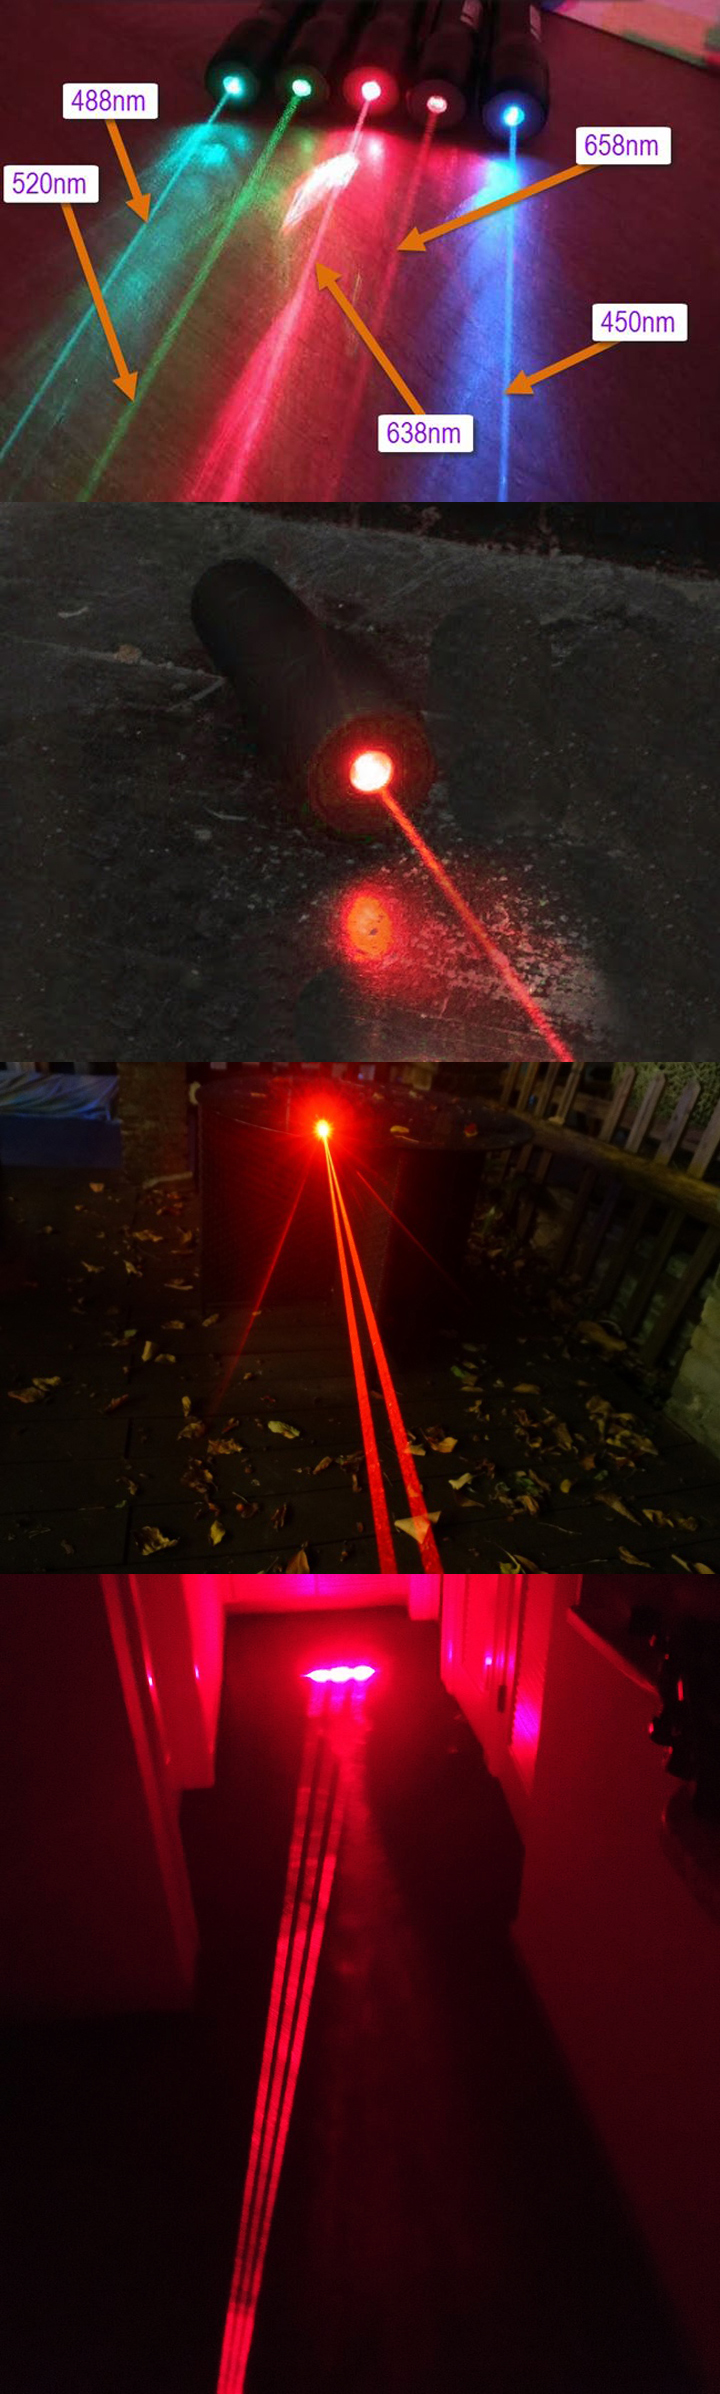 laser rouge 638nm